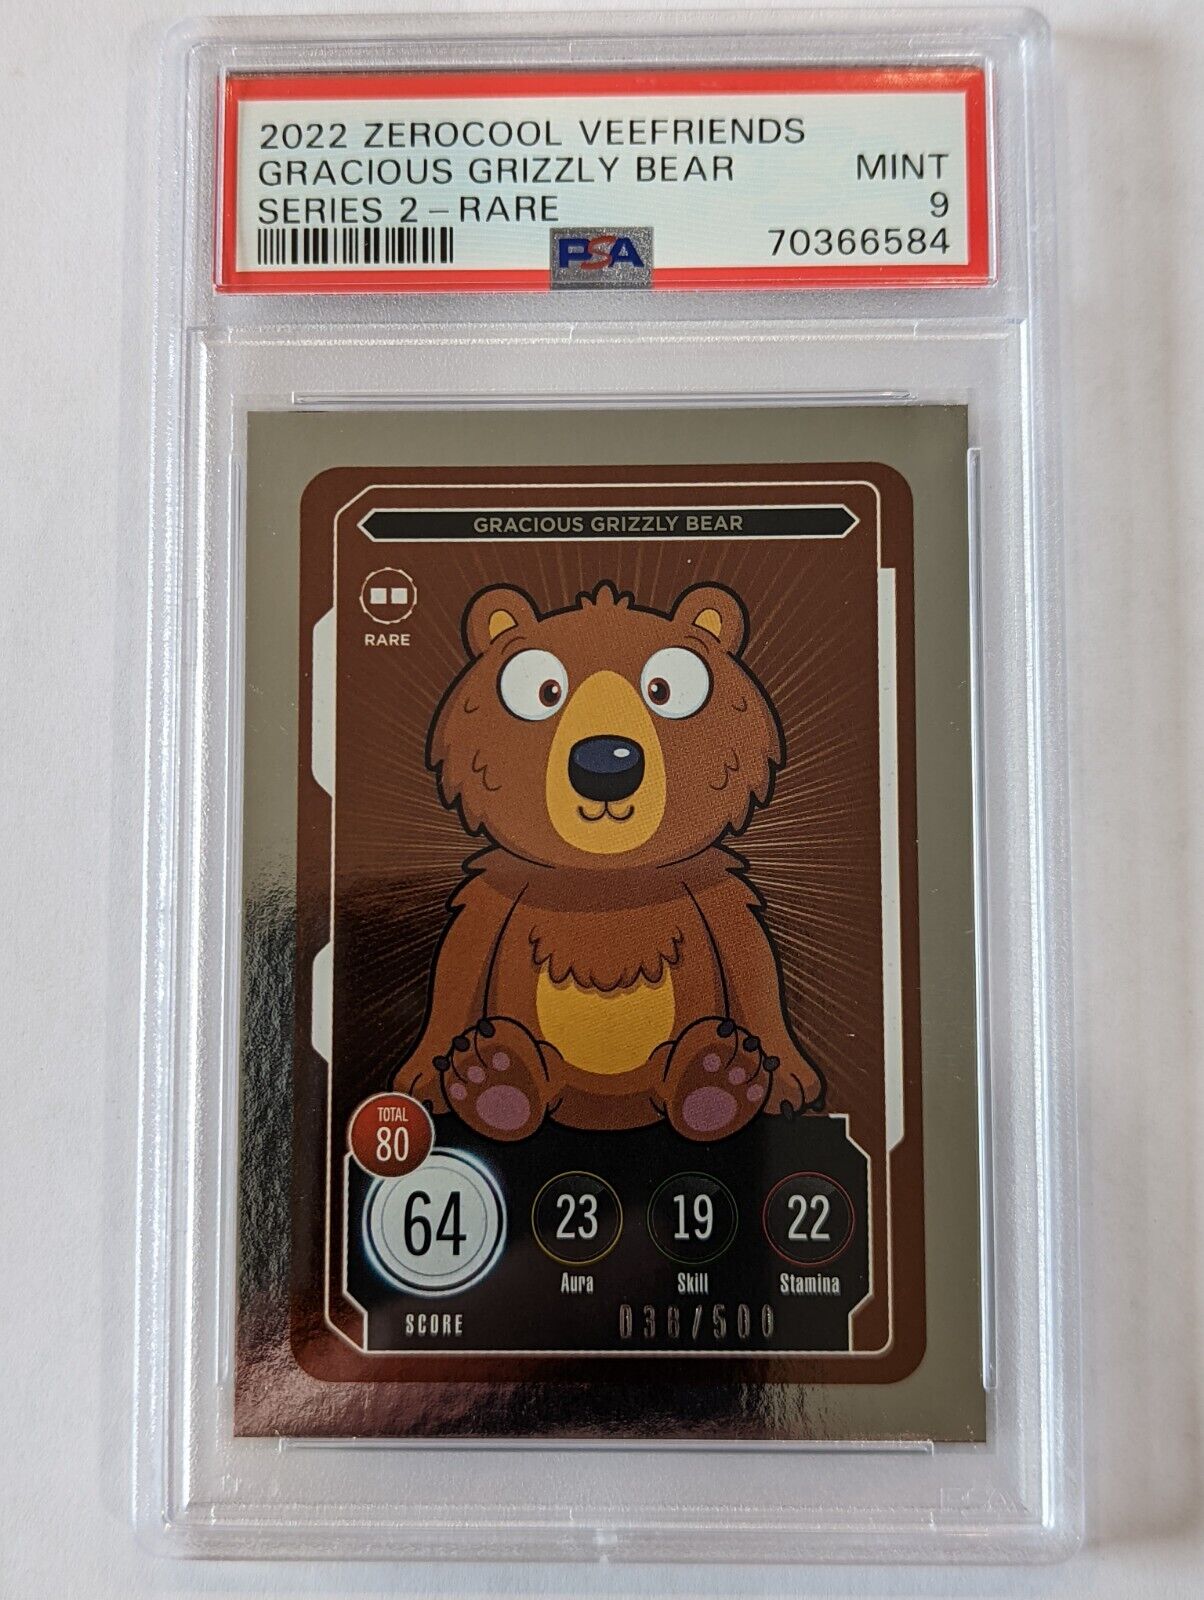 Gracious Grizzly Bear VeeFriends Compete Collect Series 2 Rare /500 PSA 9 Mint